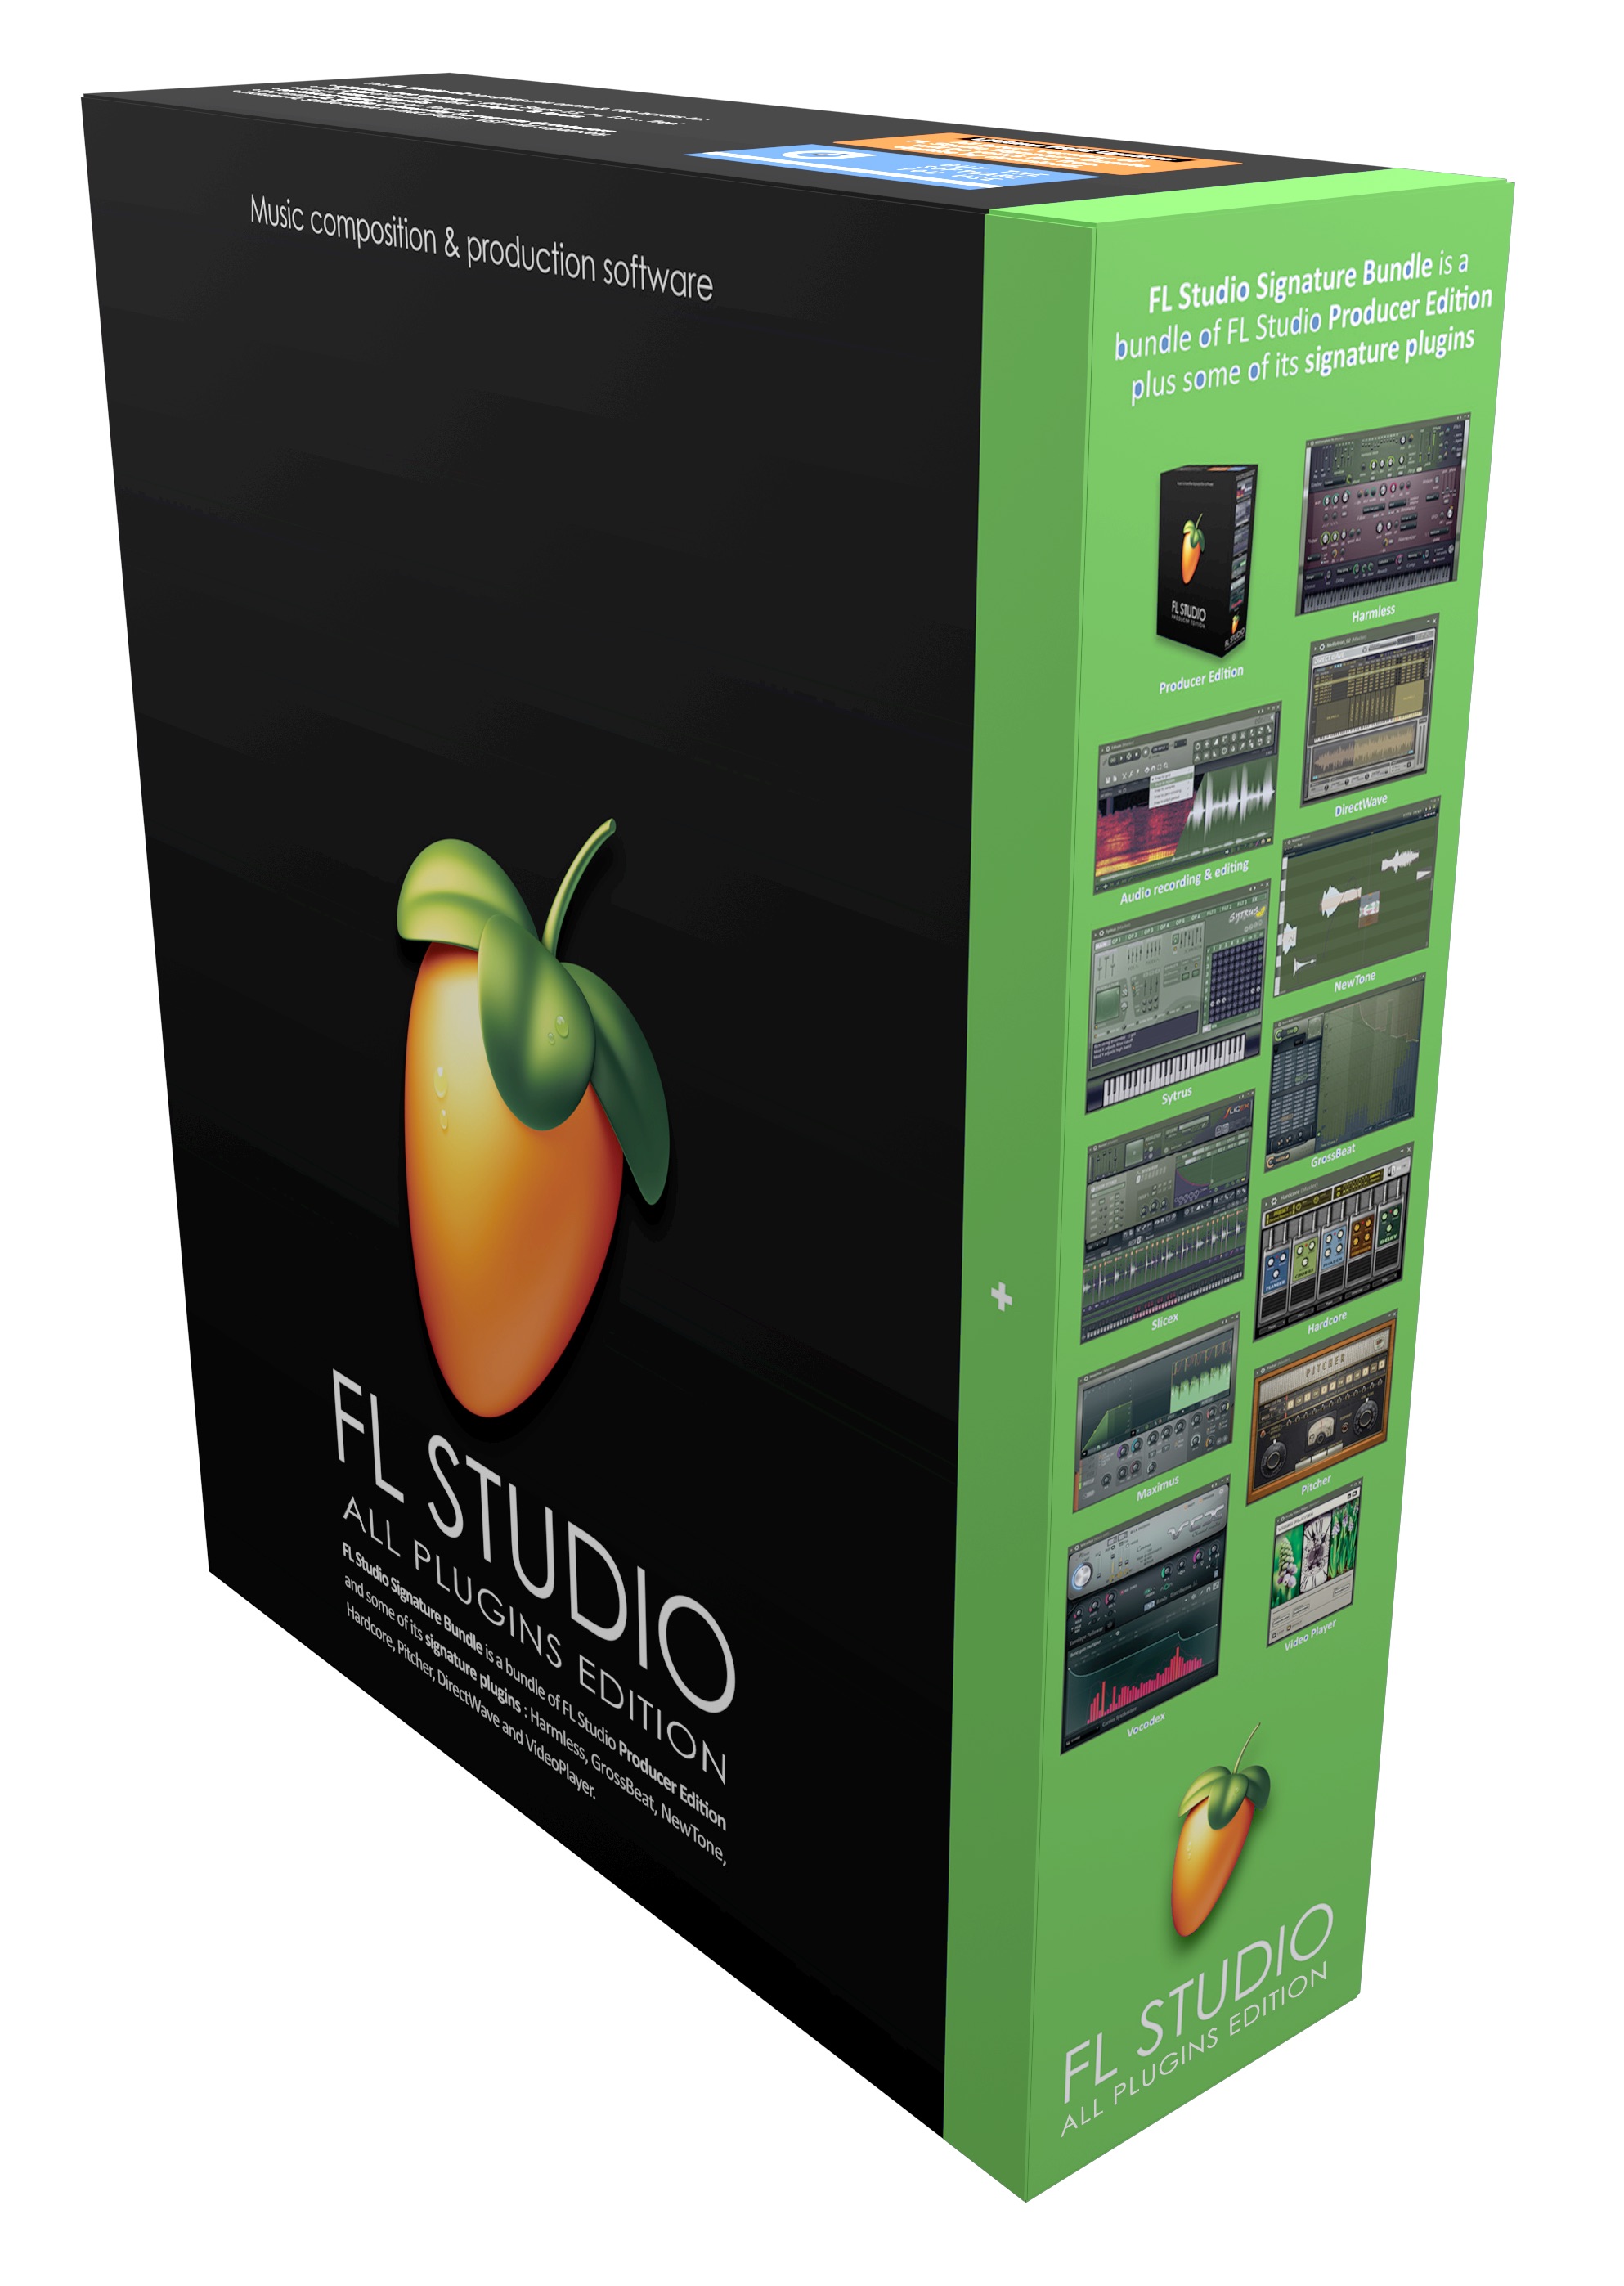 fl studio 12 all plugins bundle free download mac